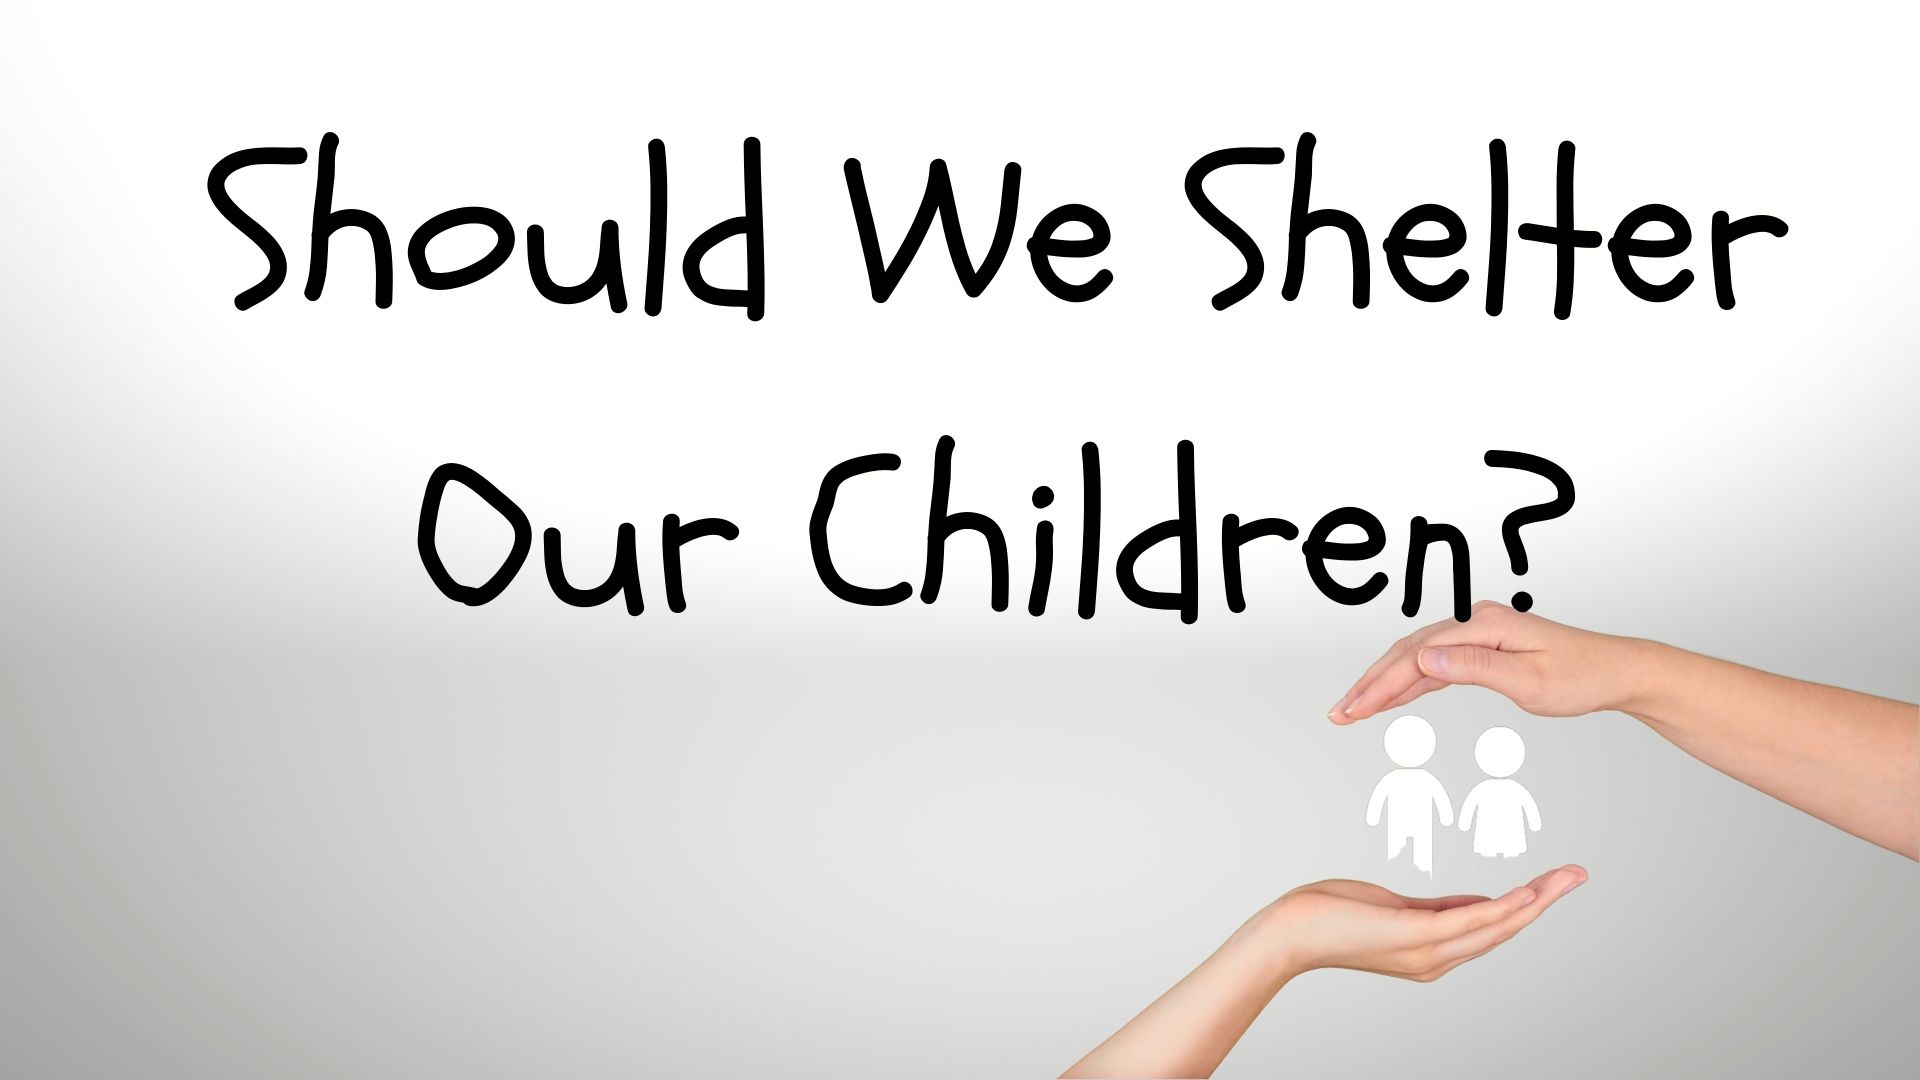 Shelter Our Children image